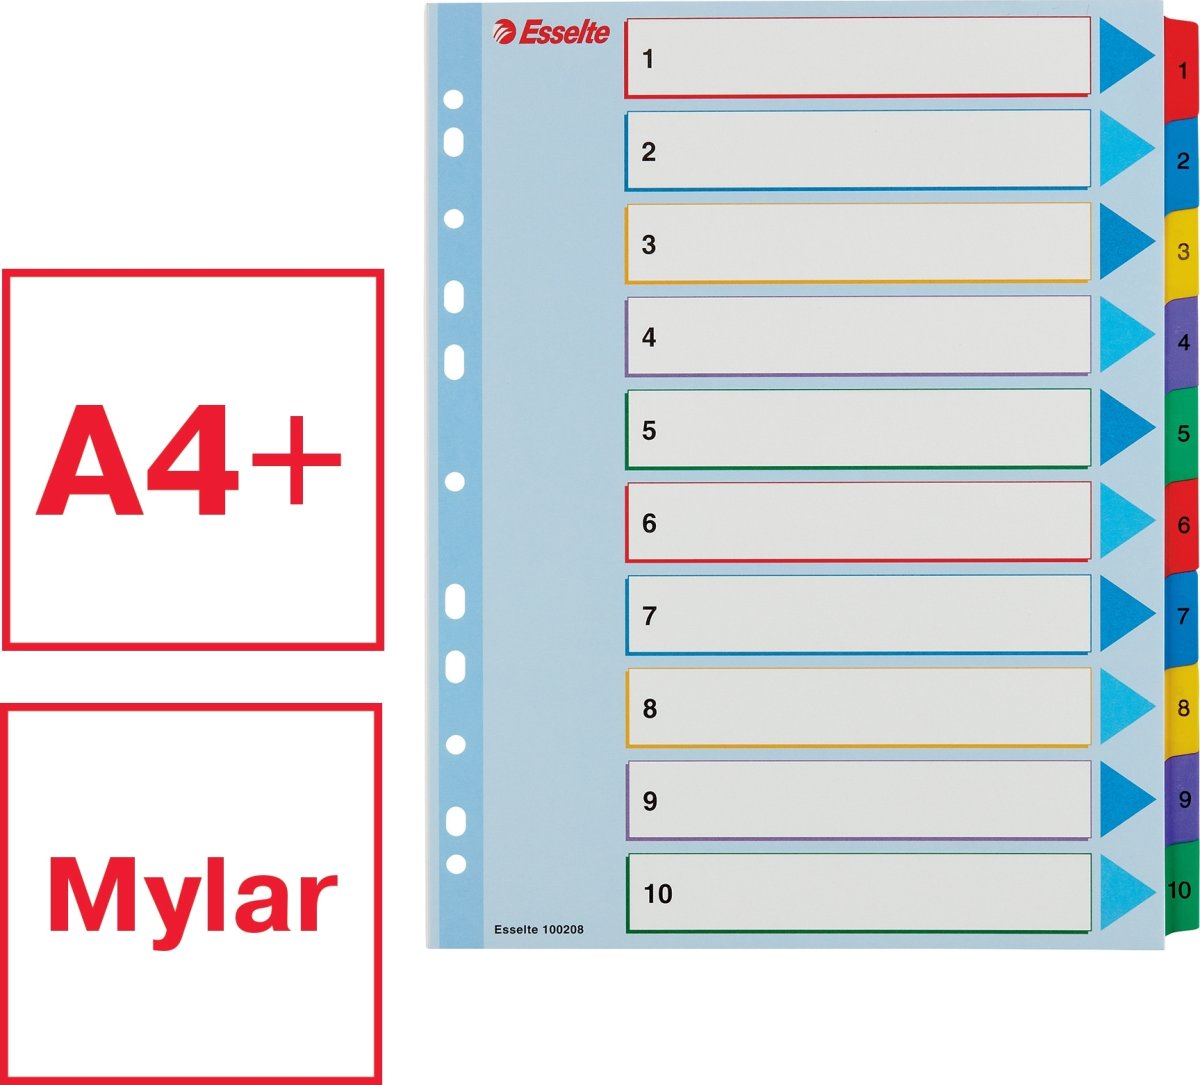 Register Esselte Mylar A4 1-10 Överskrivningsbart